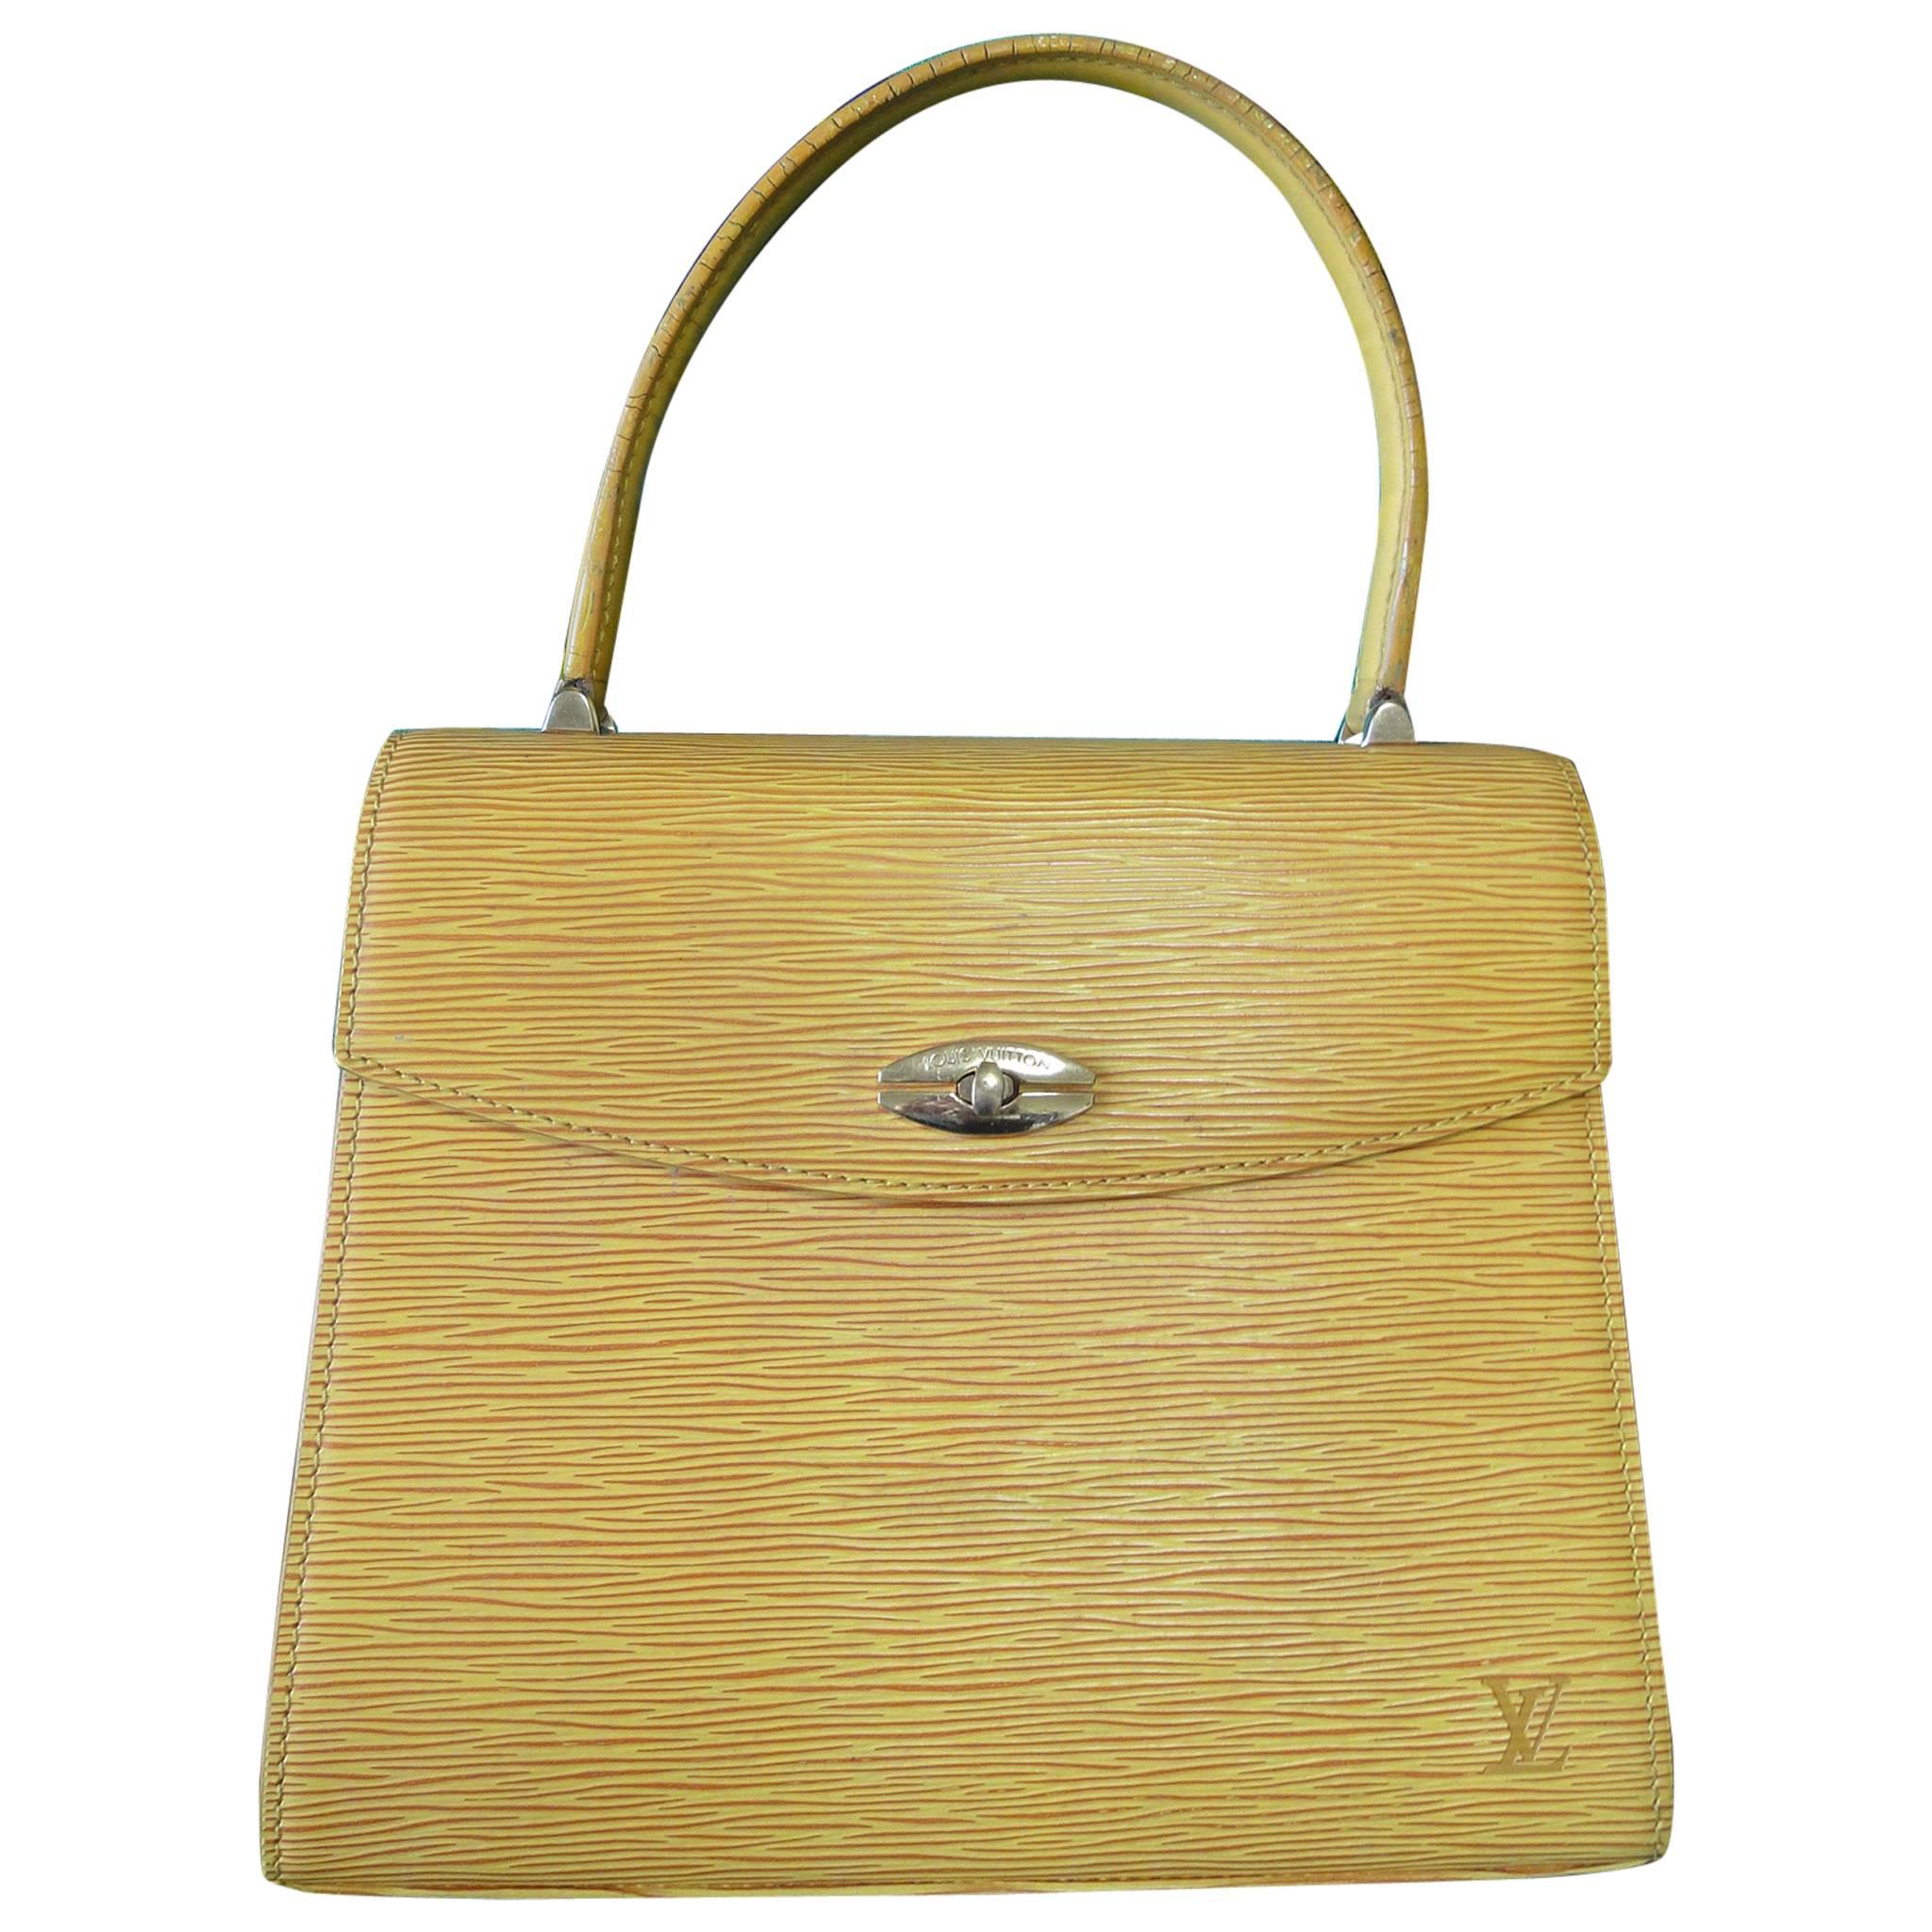 Vintage Louis Vuitton yellow epi Malesherbes handbag. Classic purse for Spring